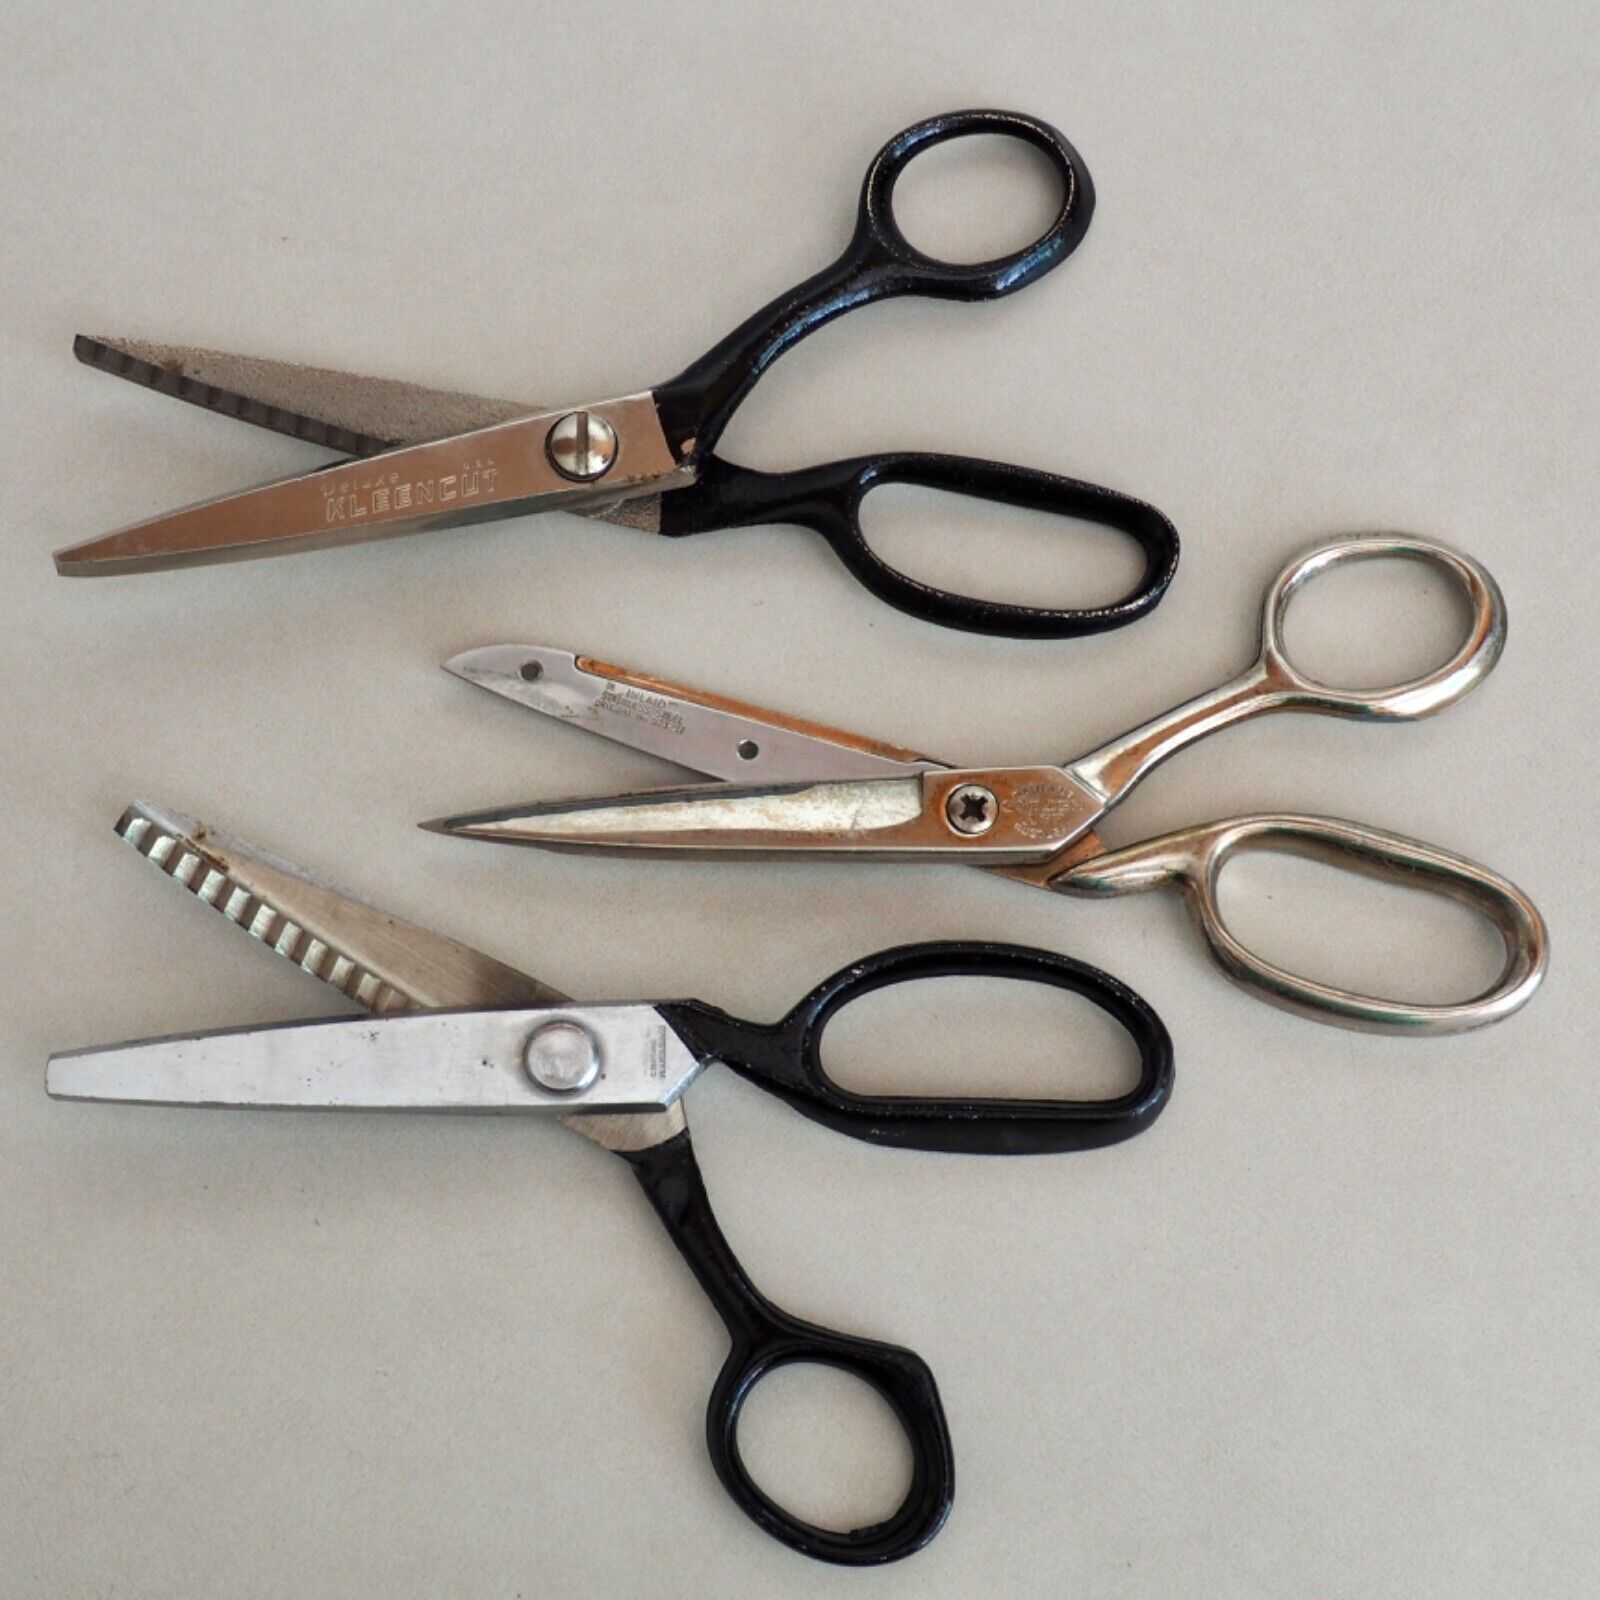 Vintage Scissors Pinking Shears Lot Richards Radiant Golden Age Wales Kleencut